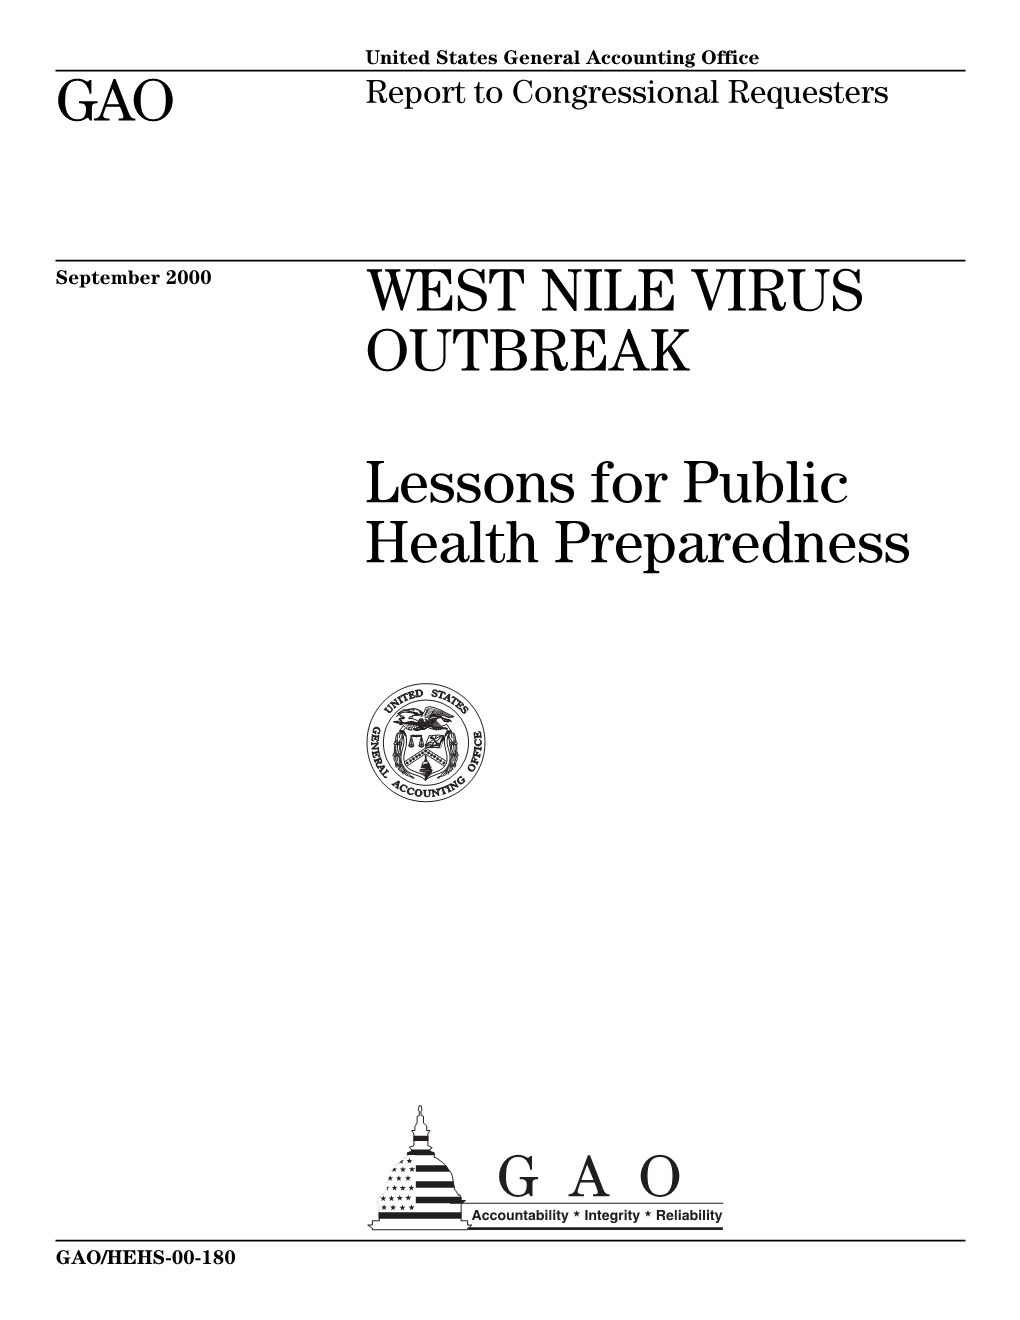 HEHS-00-180 West Nile Virus Outbreak Contents